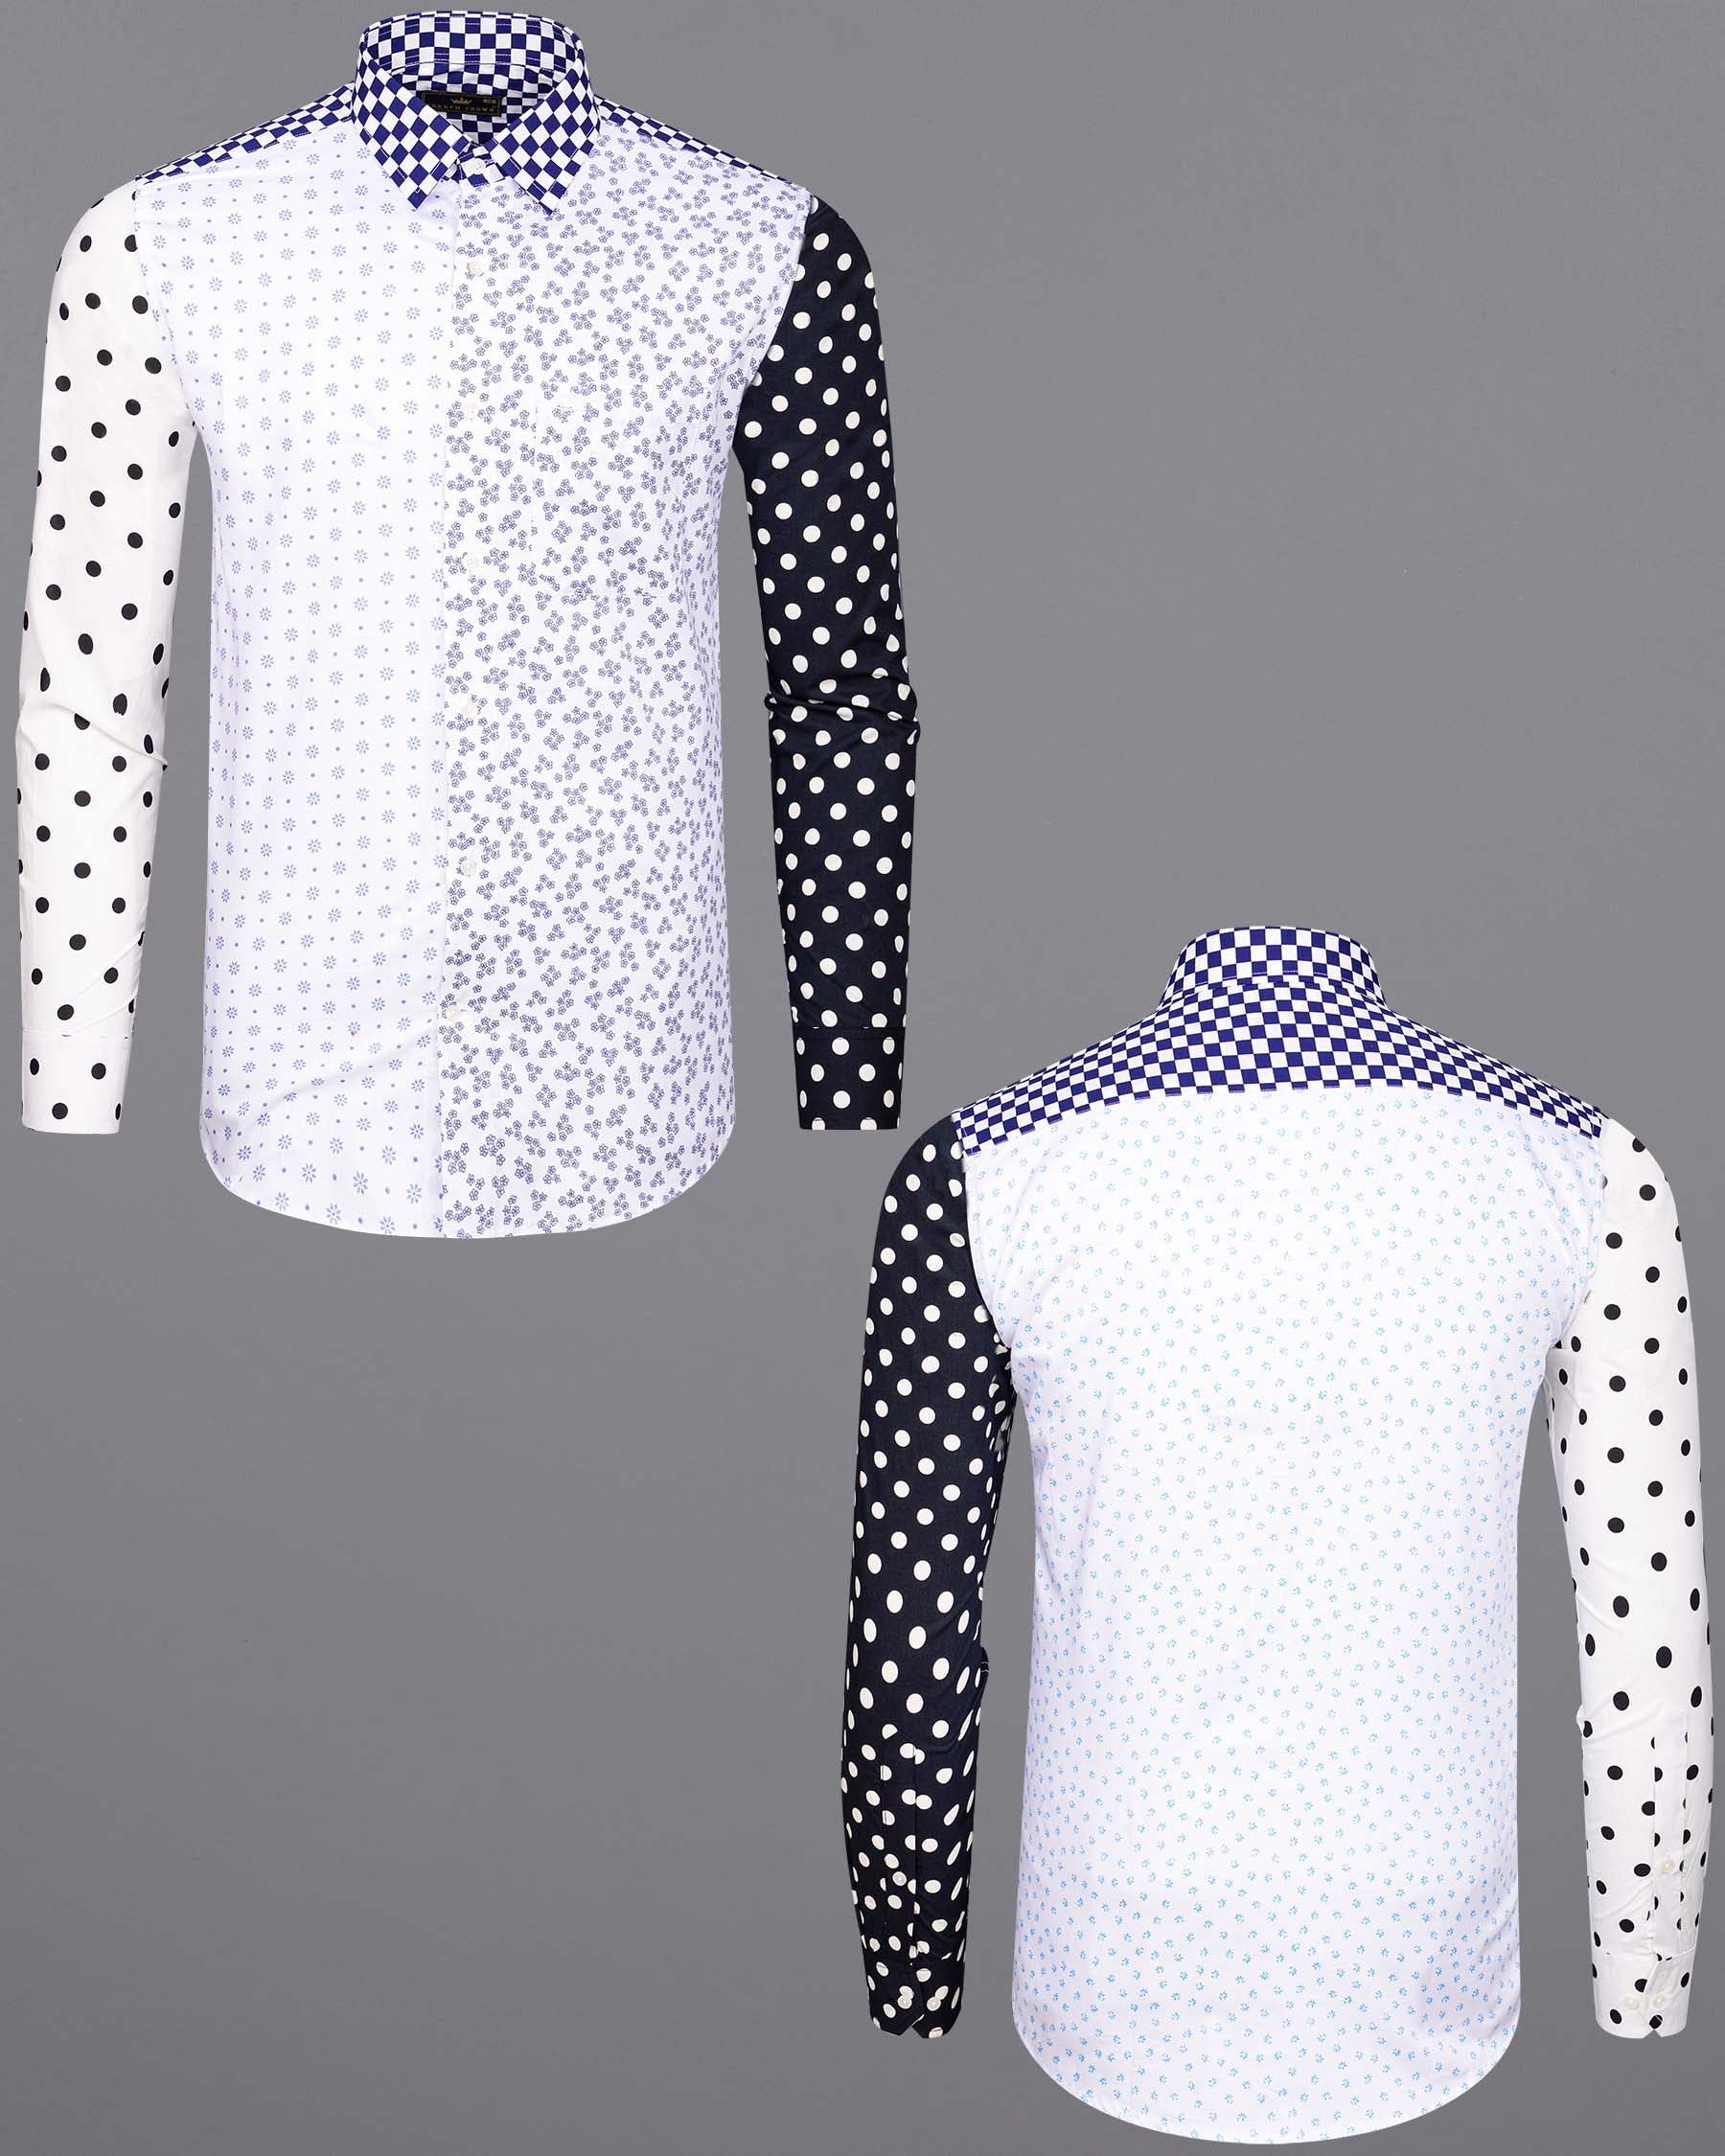 Bright White and Multi Colour Printed Blocking Super Soft Premium Cotton Designer Shirt 7580-38, 7580-H-38, 7580-39, 7580-H-39, 7580-40, 7580-H-40, 7580-42, 7580-H-42, 7580-44, 7580-H-44, 7580-46, 7580-H-46, 7580-48, 7580-H-48, 7580-50, 7580-H-50, 7580-52, 7580-H-52